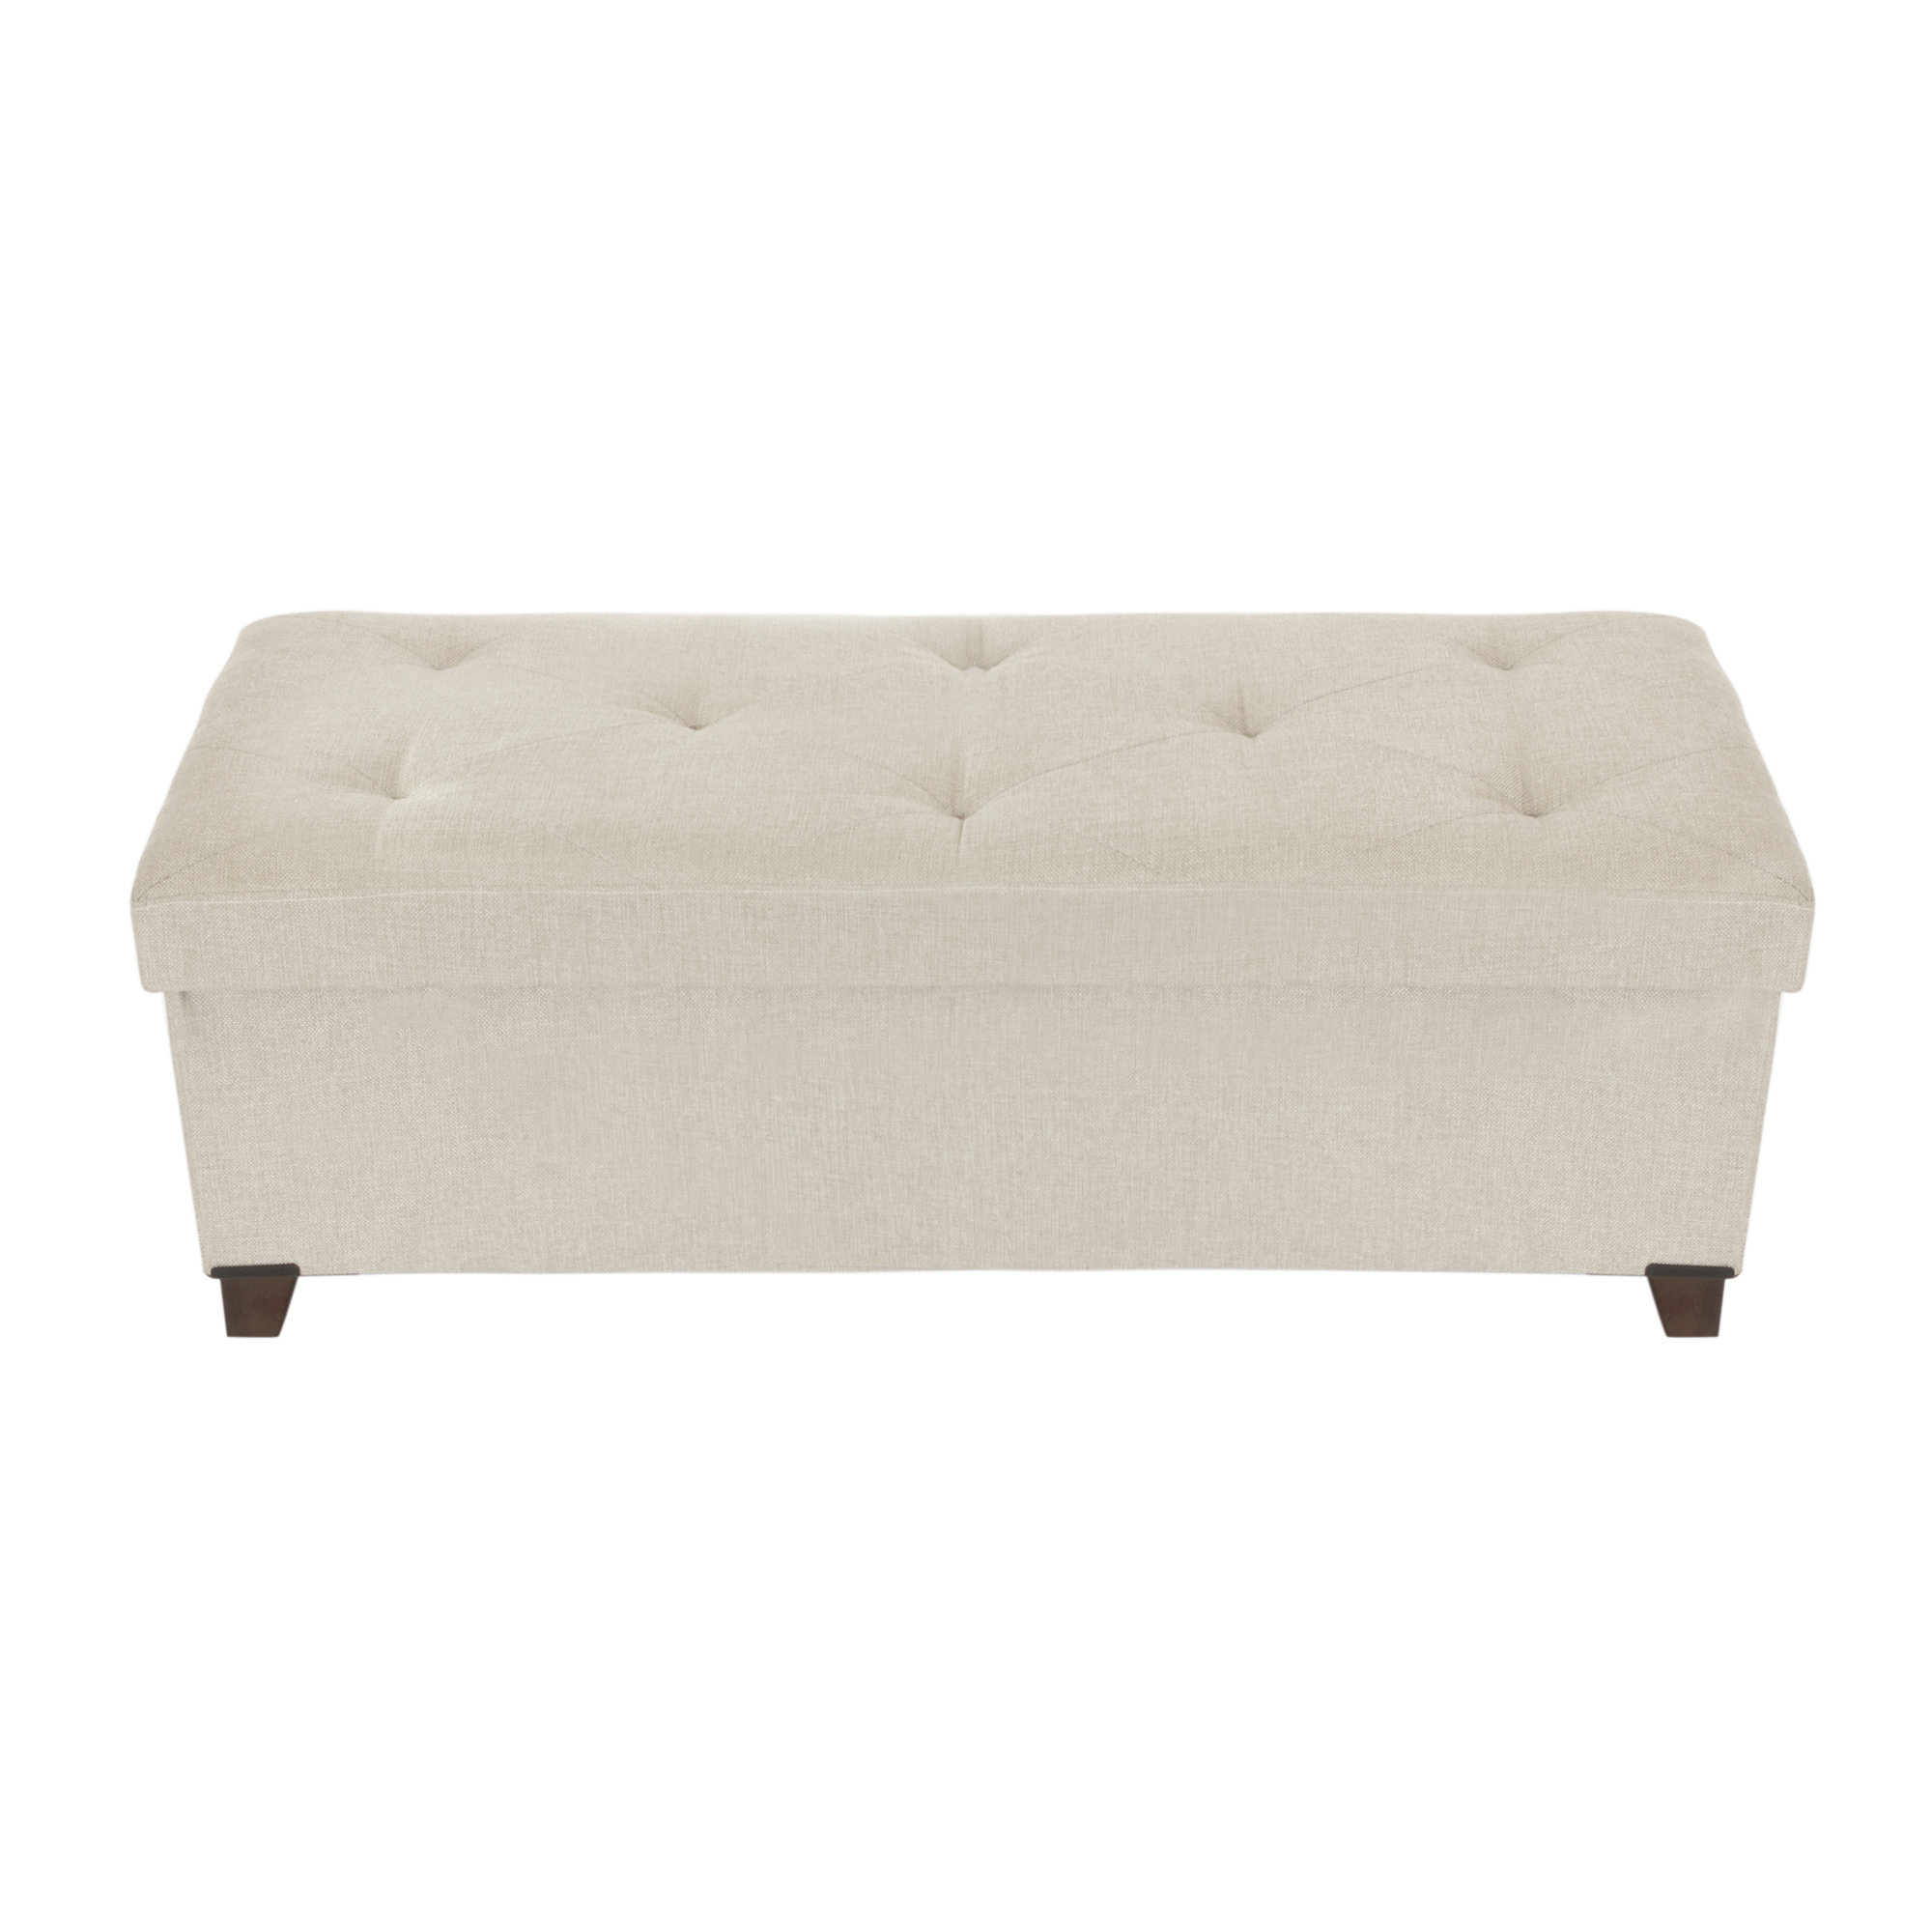 Wood Upholstered | Porter with Reviews Jenaya Winston Legs Wayfair Storage Solid & Bench